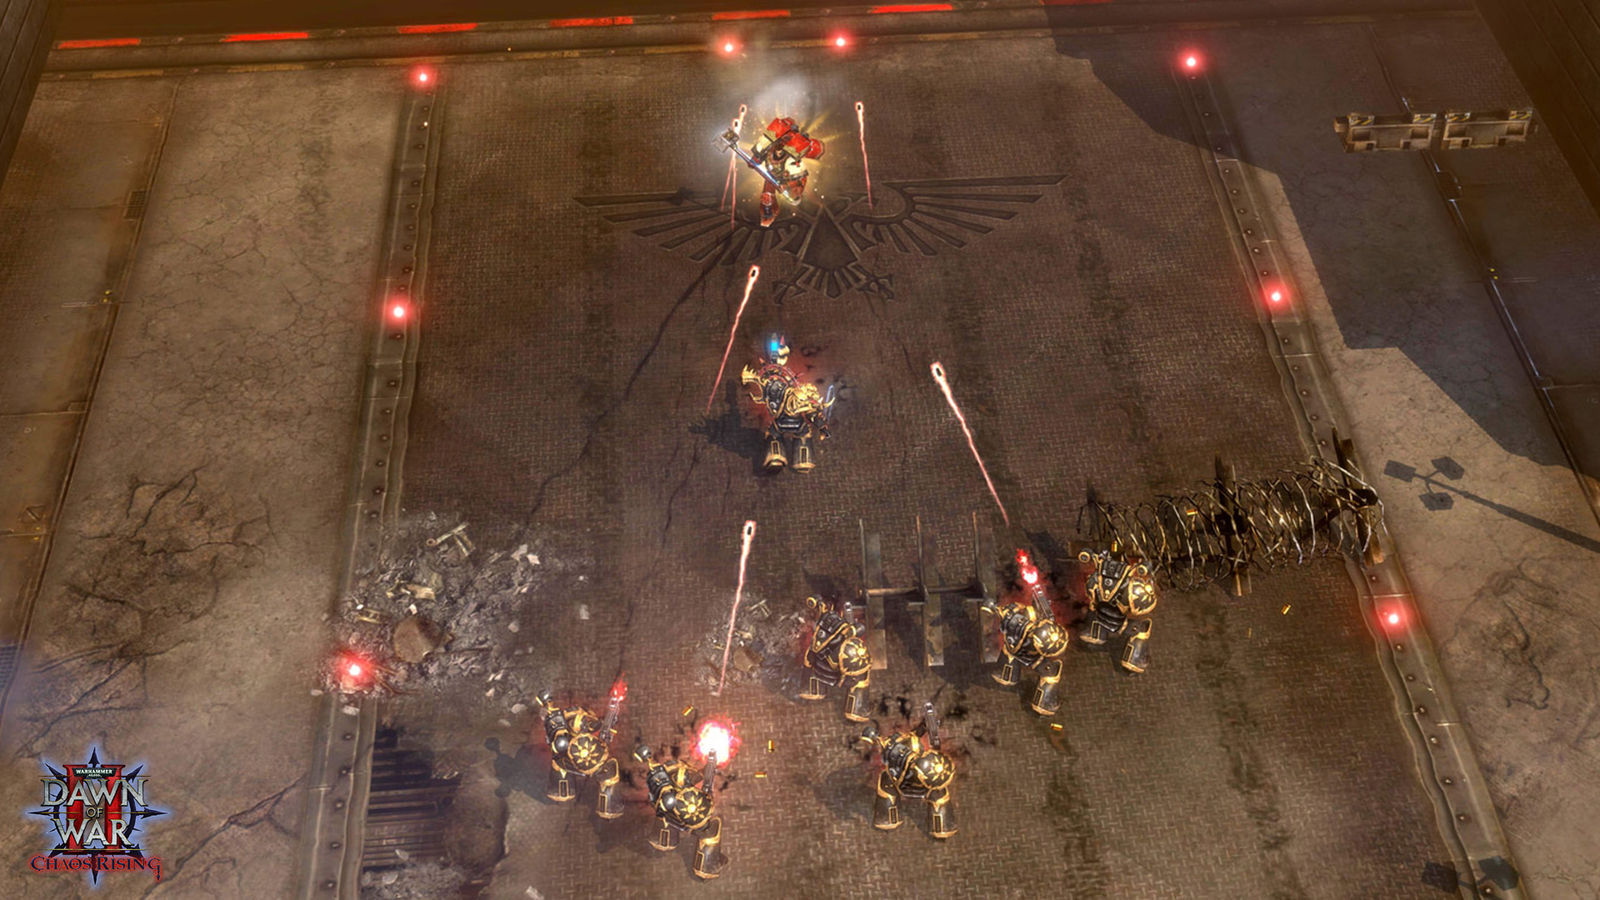 Warhammer 40,000: Dawn of War II 2 Chaos Rising (Steam)